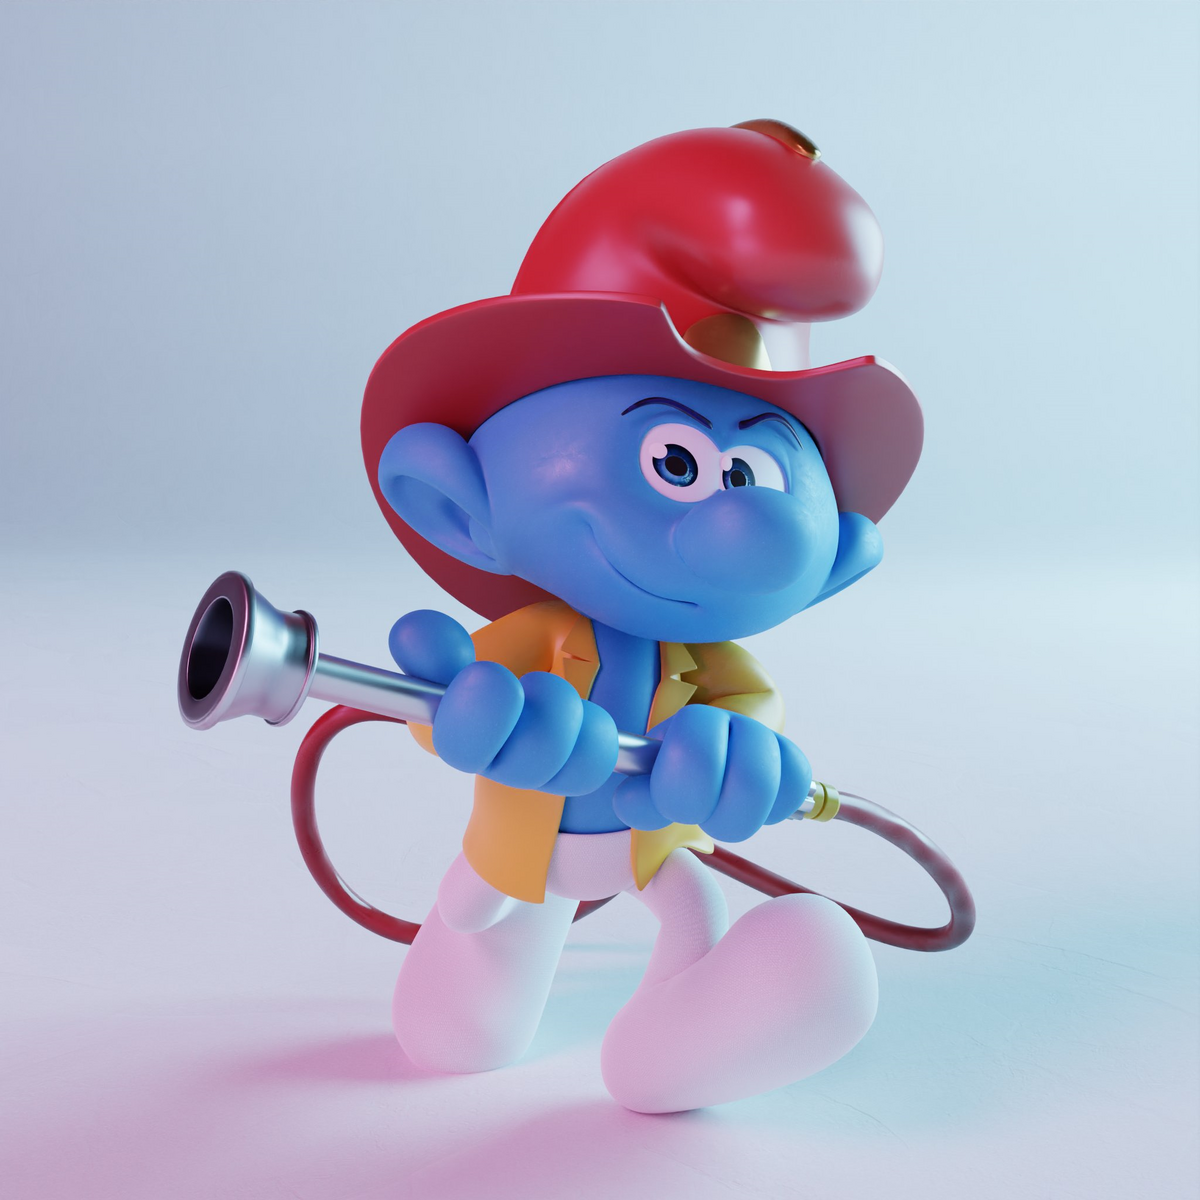 The Smurfs Rescue Fireman Toy Island Mini Figure